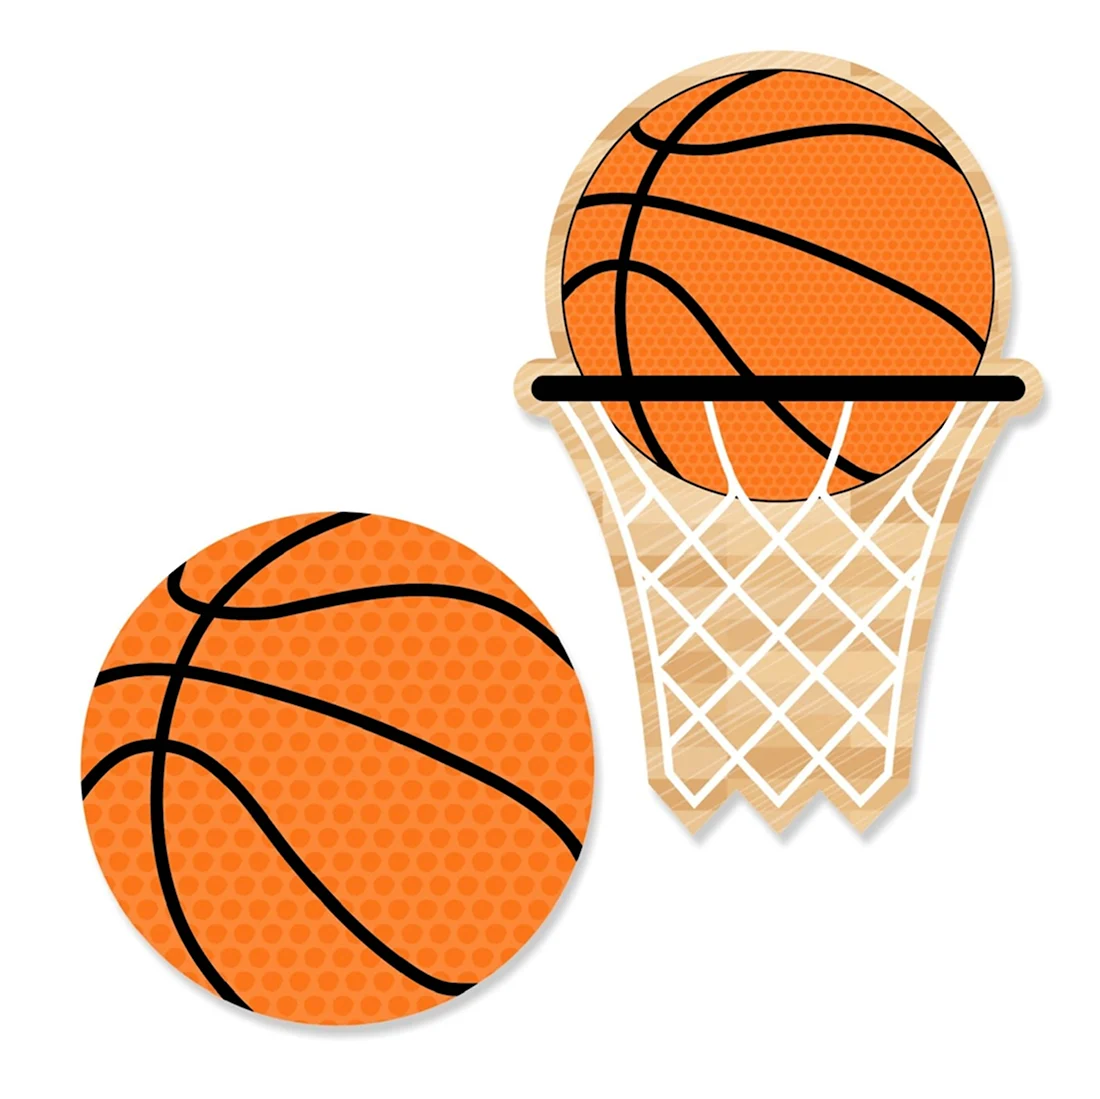 Аппликация на тему баскетбол